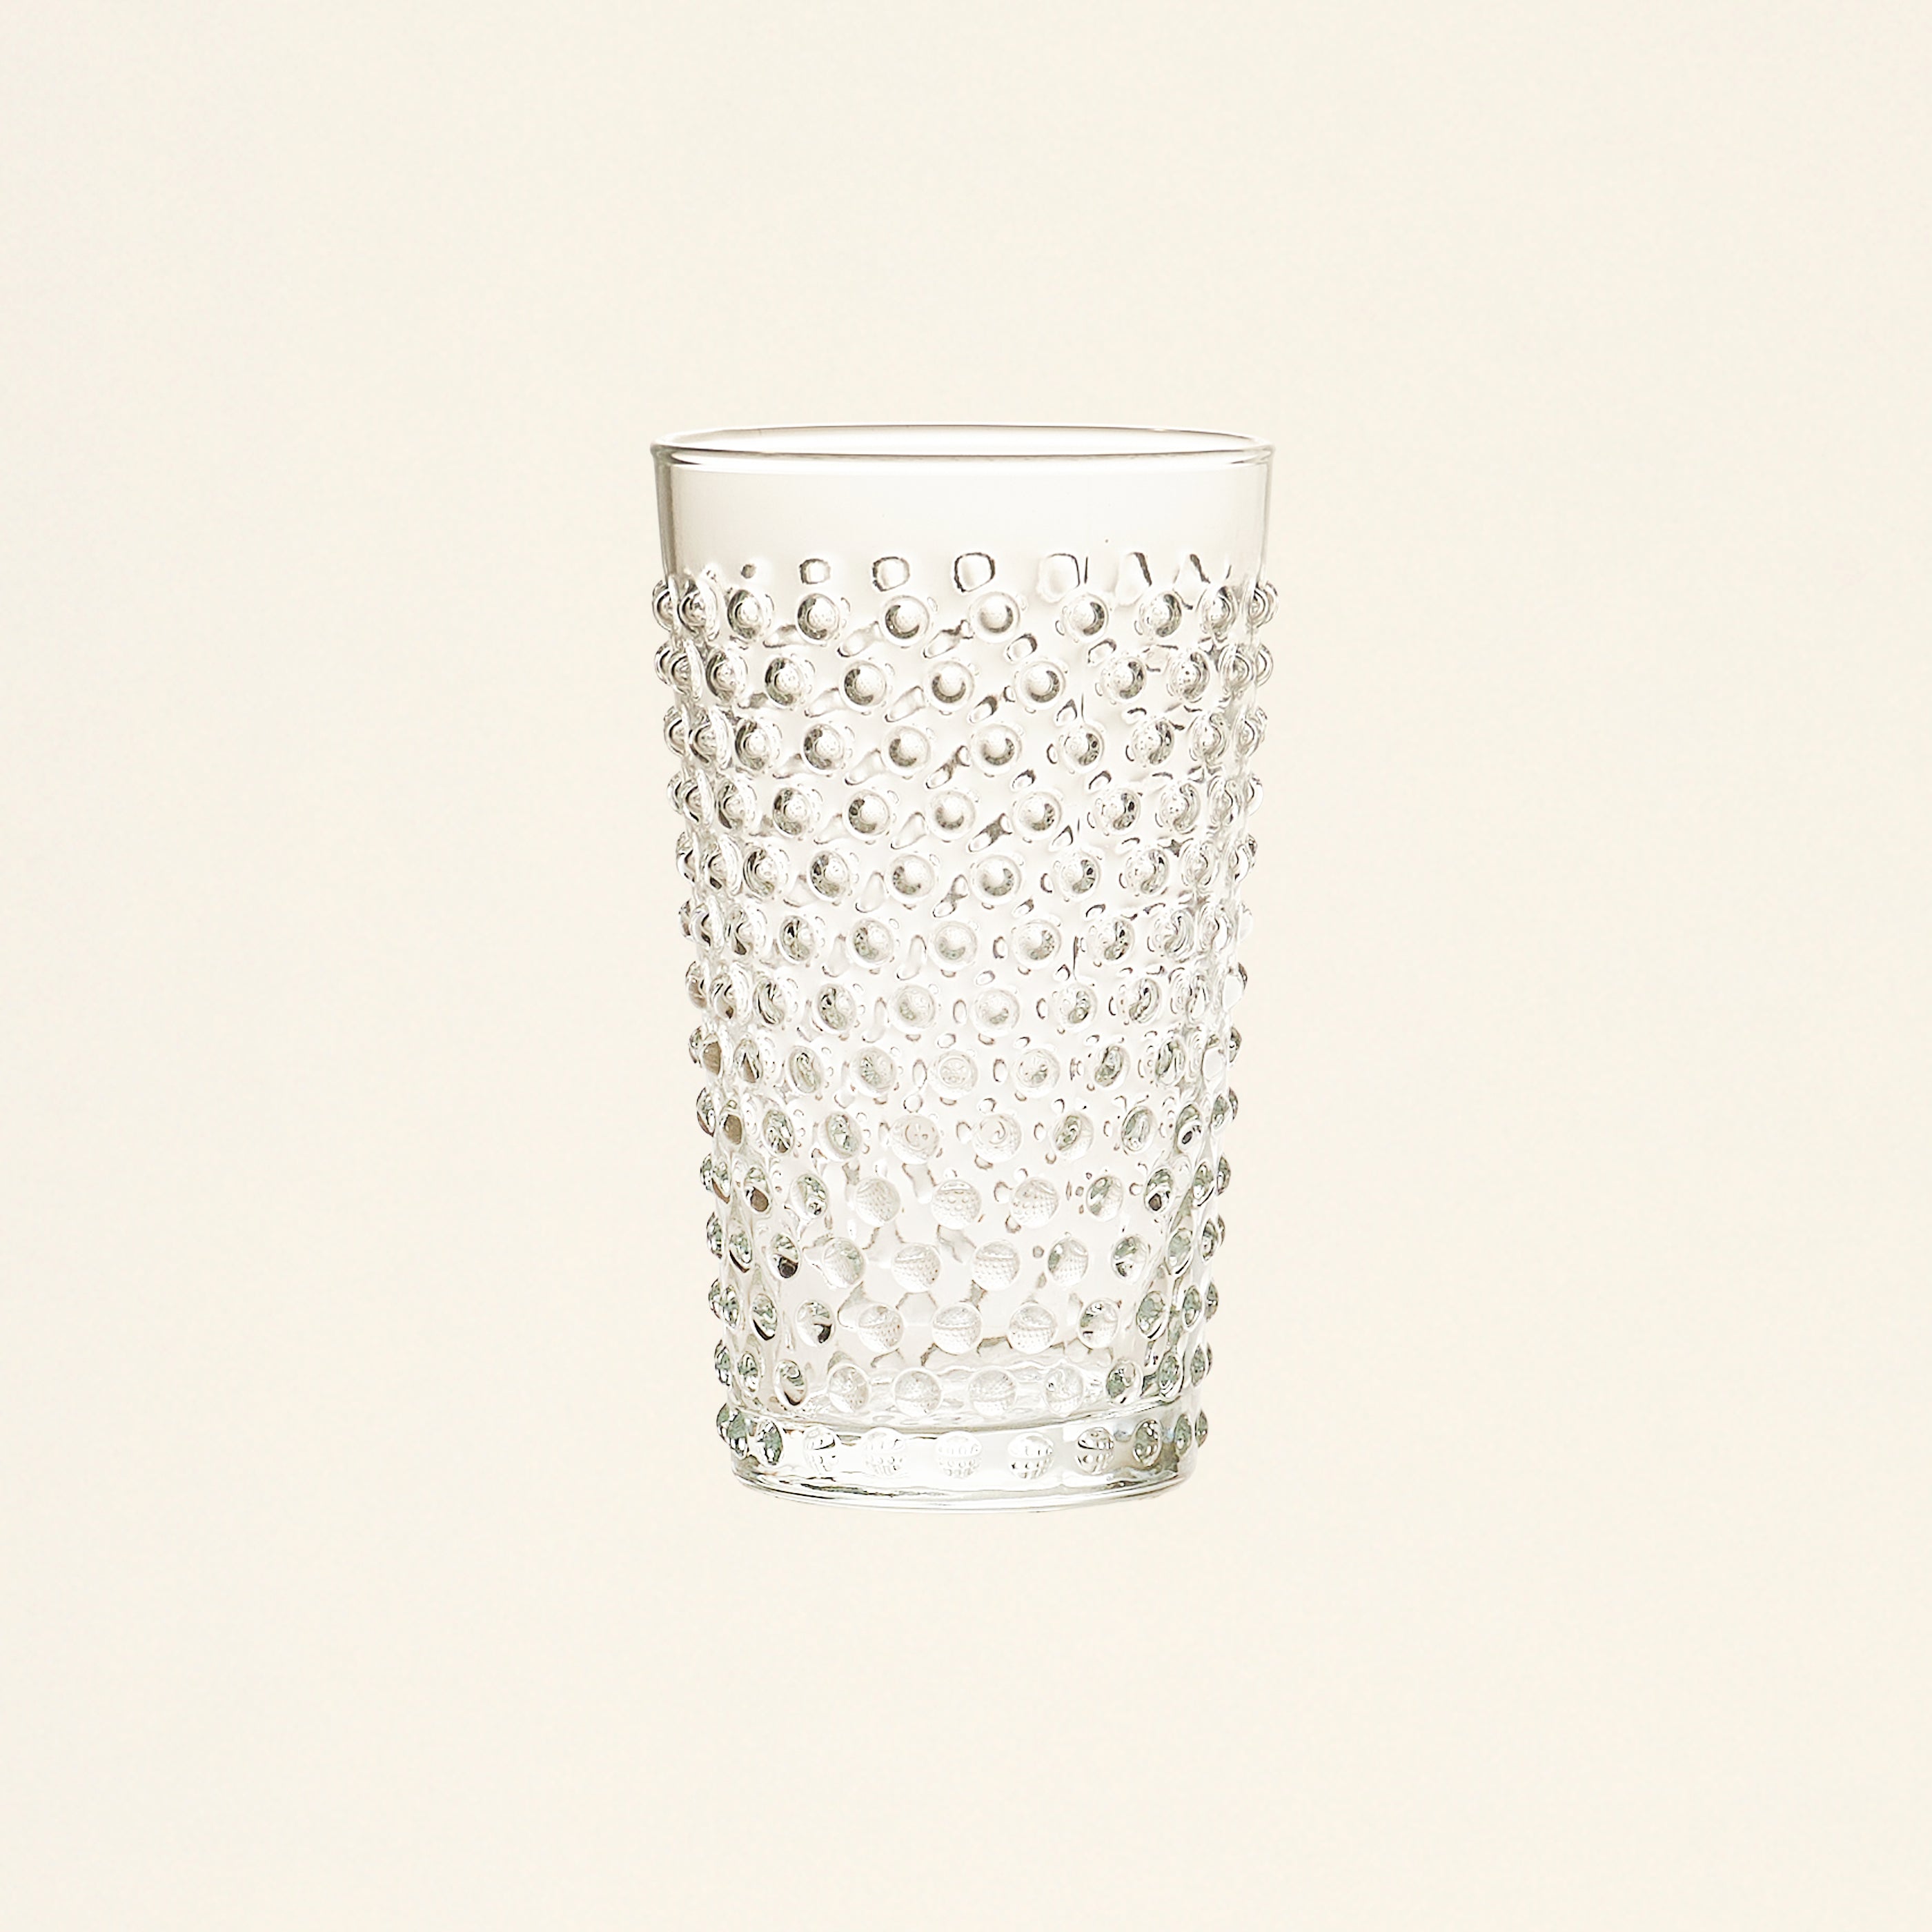 Vintage Drinking Glasses . Set of Glass Highball Tumblers . Fancy Brunch  Barware 